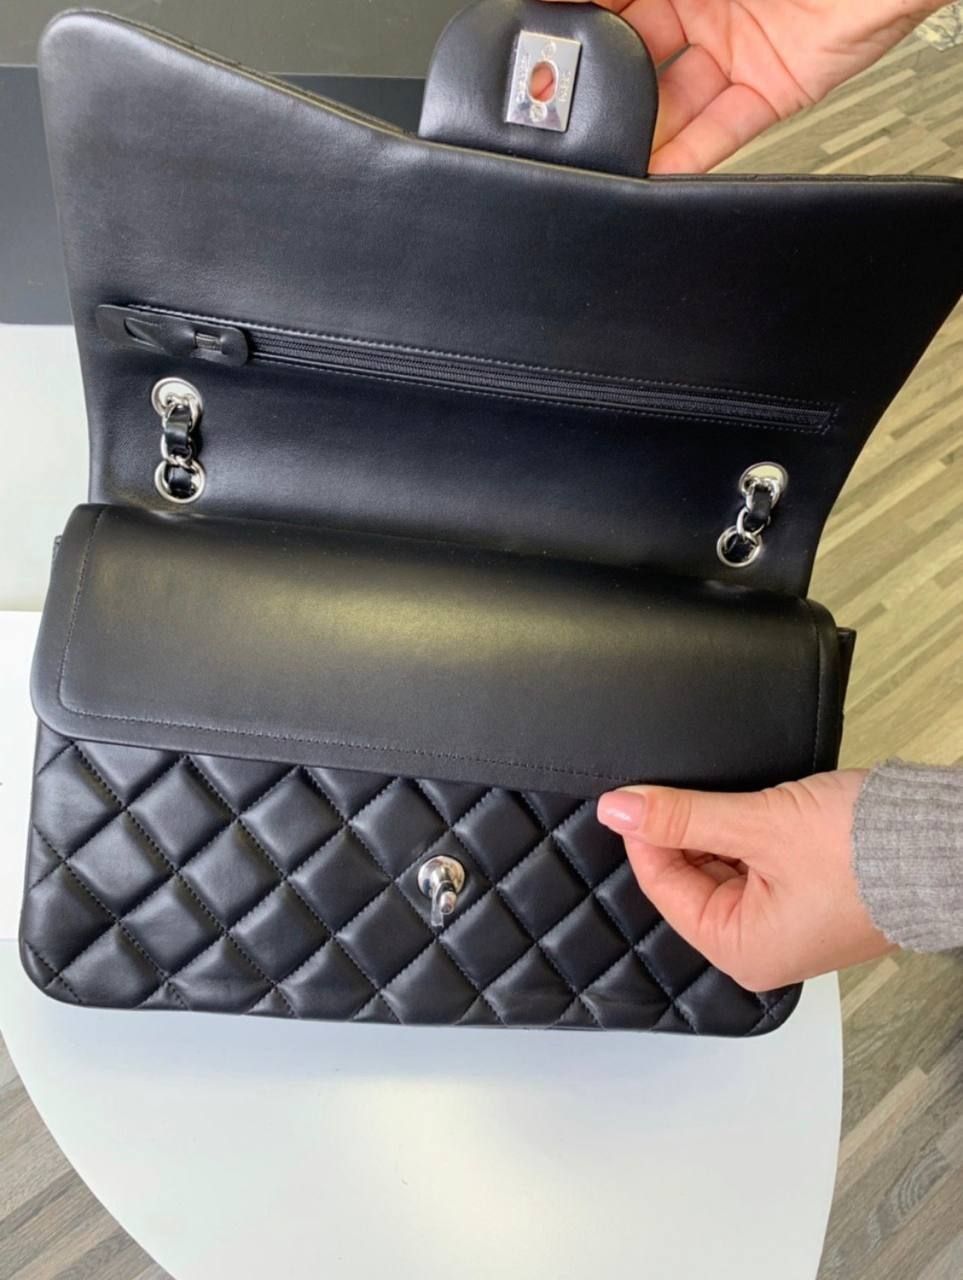 Кожаная сумка Chanel 2.55, кожаная сумка Шанельразмер 25 см